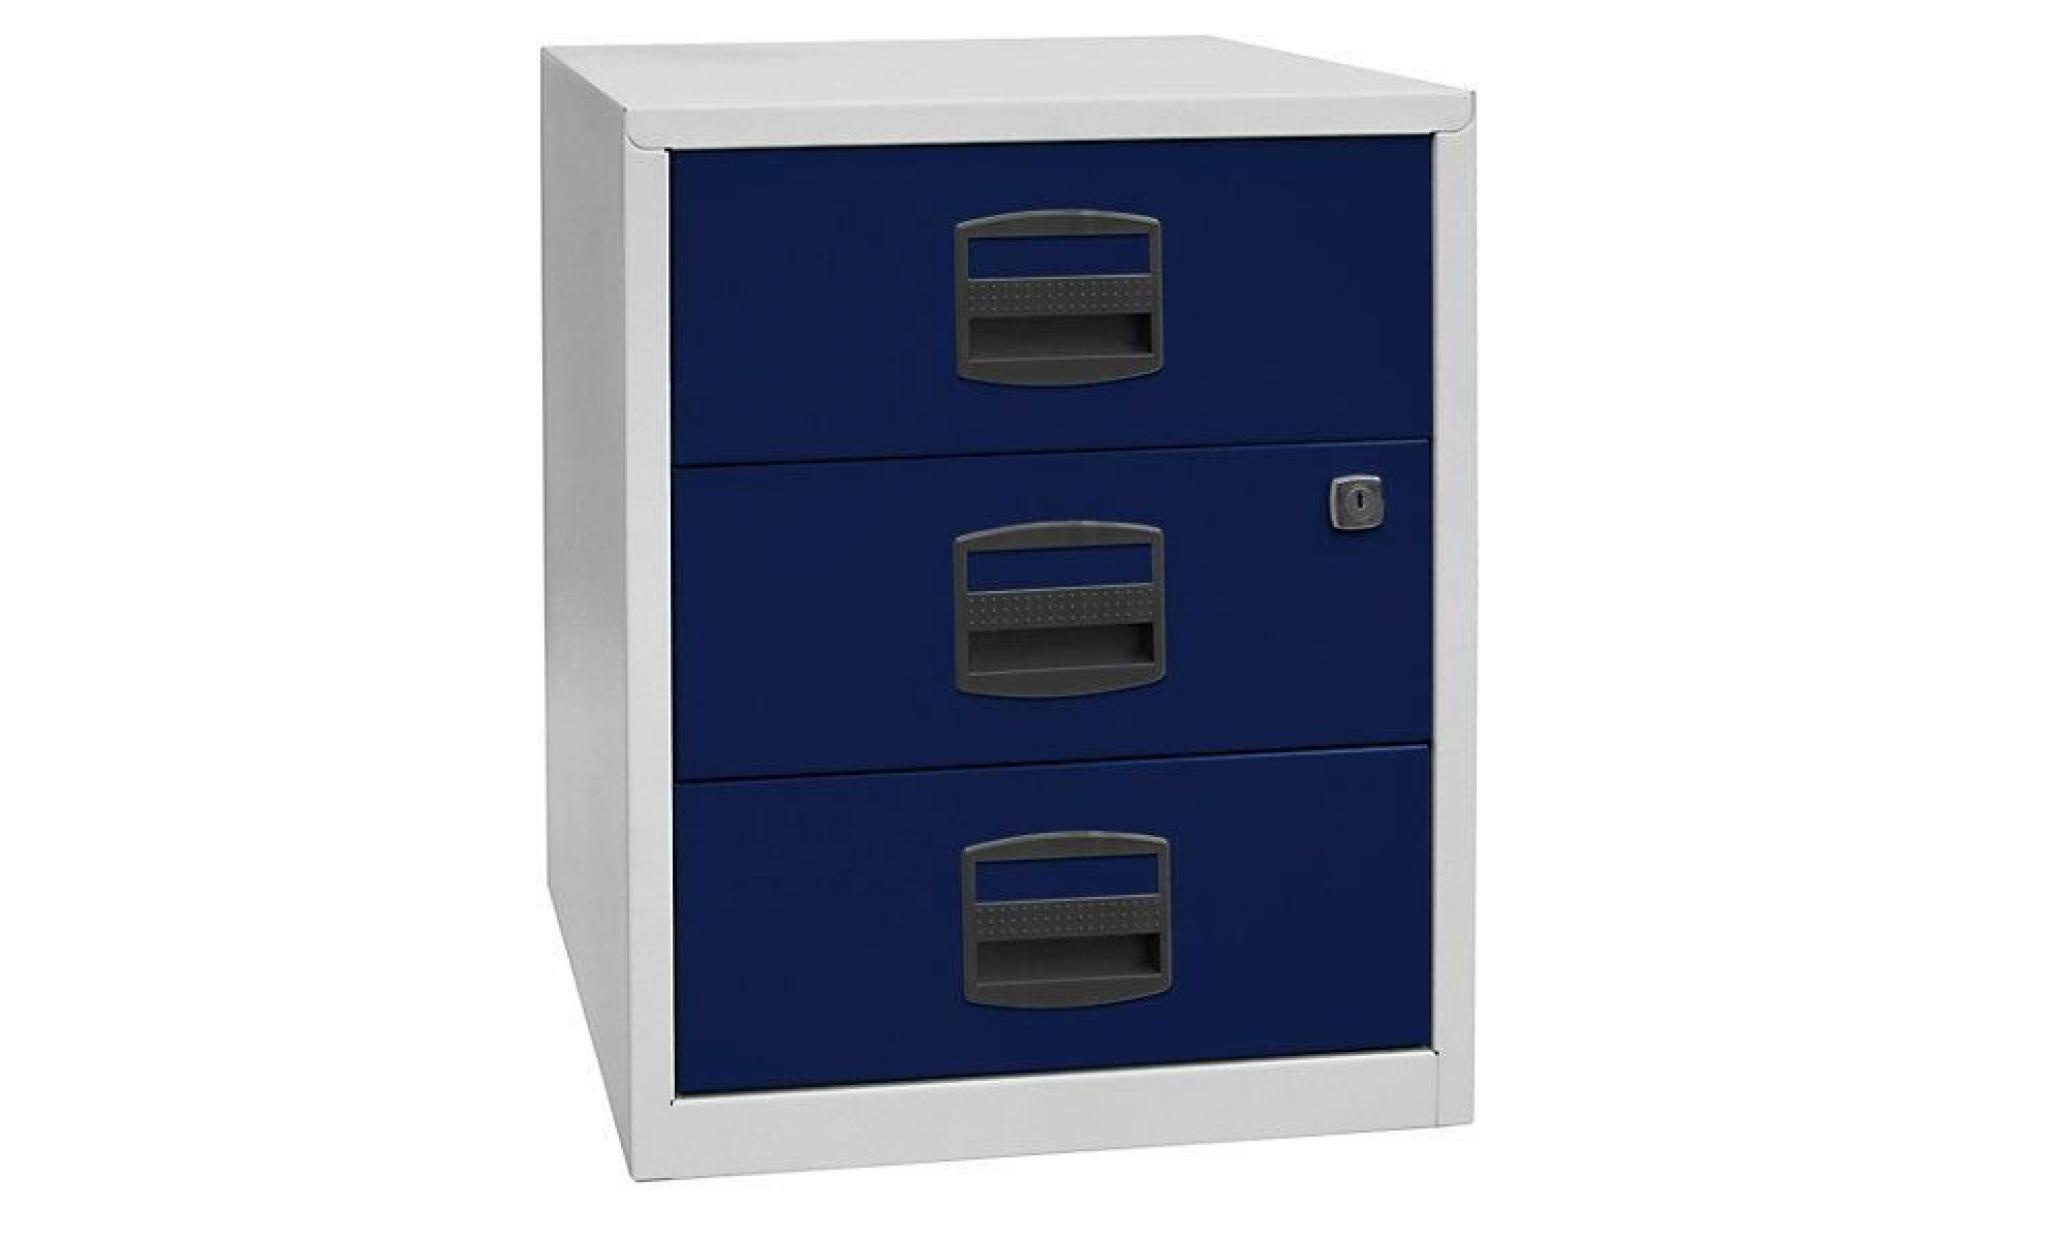 armoire mobile hauteur bureau pfa   3 tiroirs universels noir   armoire basse armoire de bureau armoires basses armoires de bureau